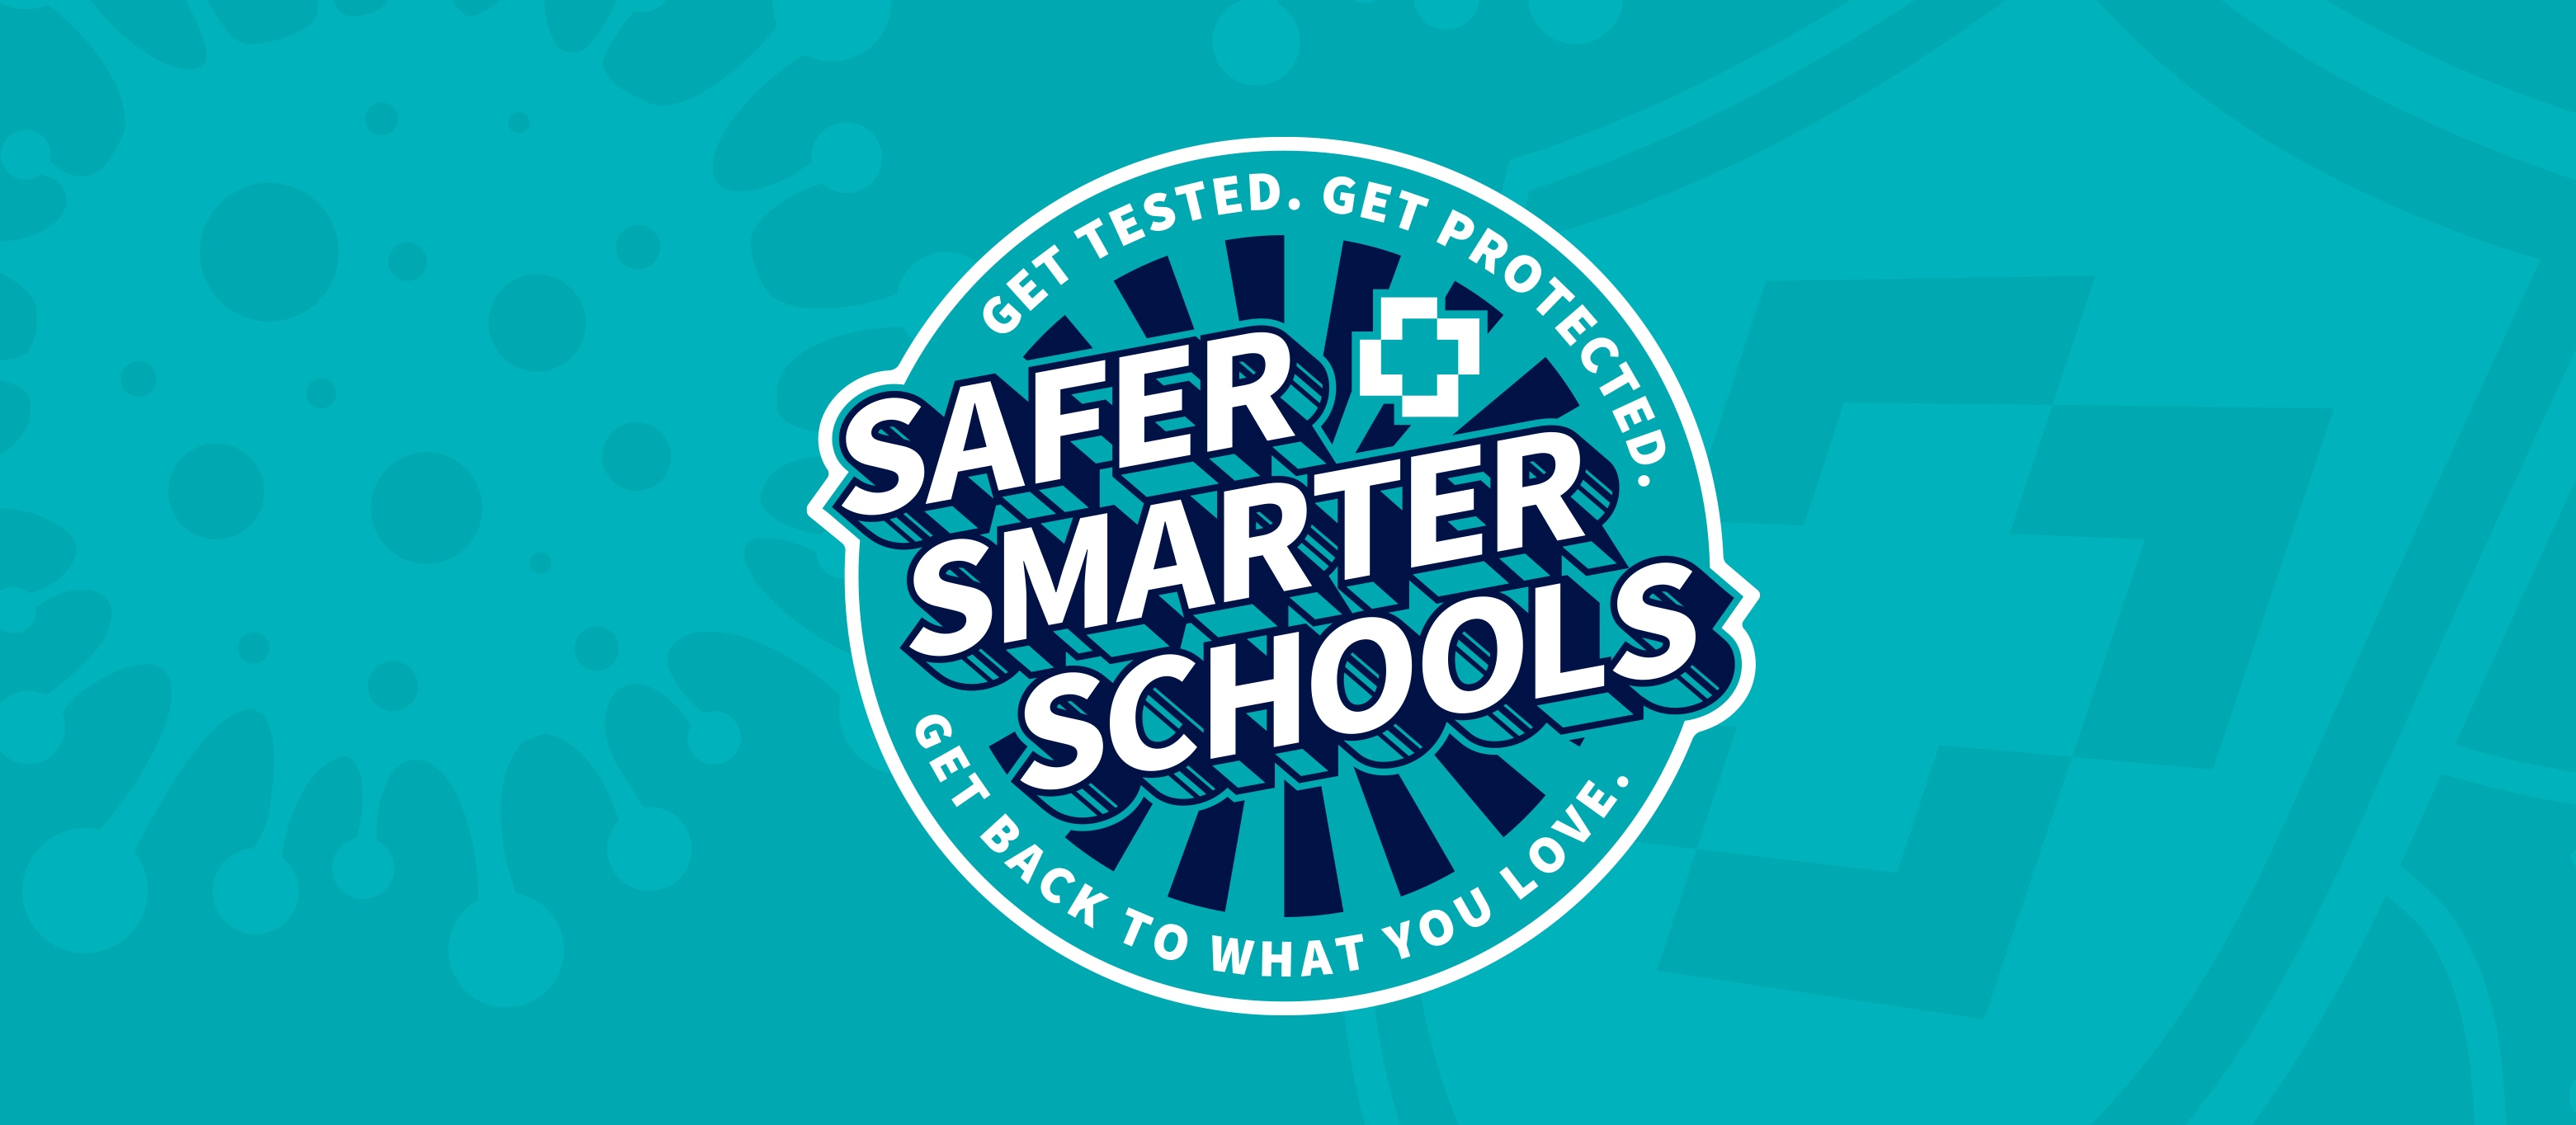 LDH "Safer, Smarter Schools" Campaign